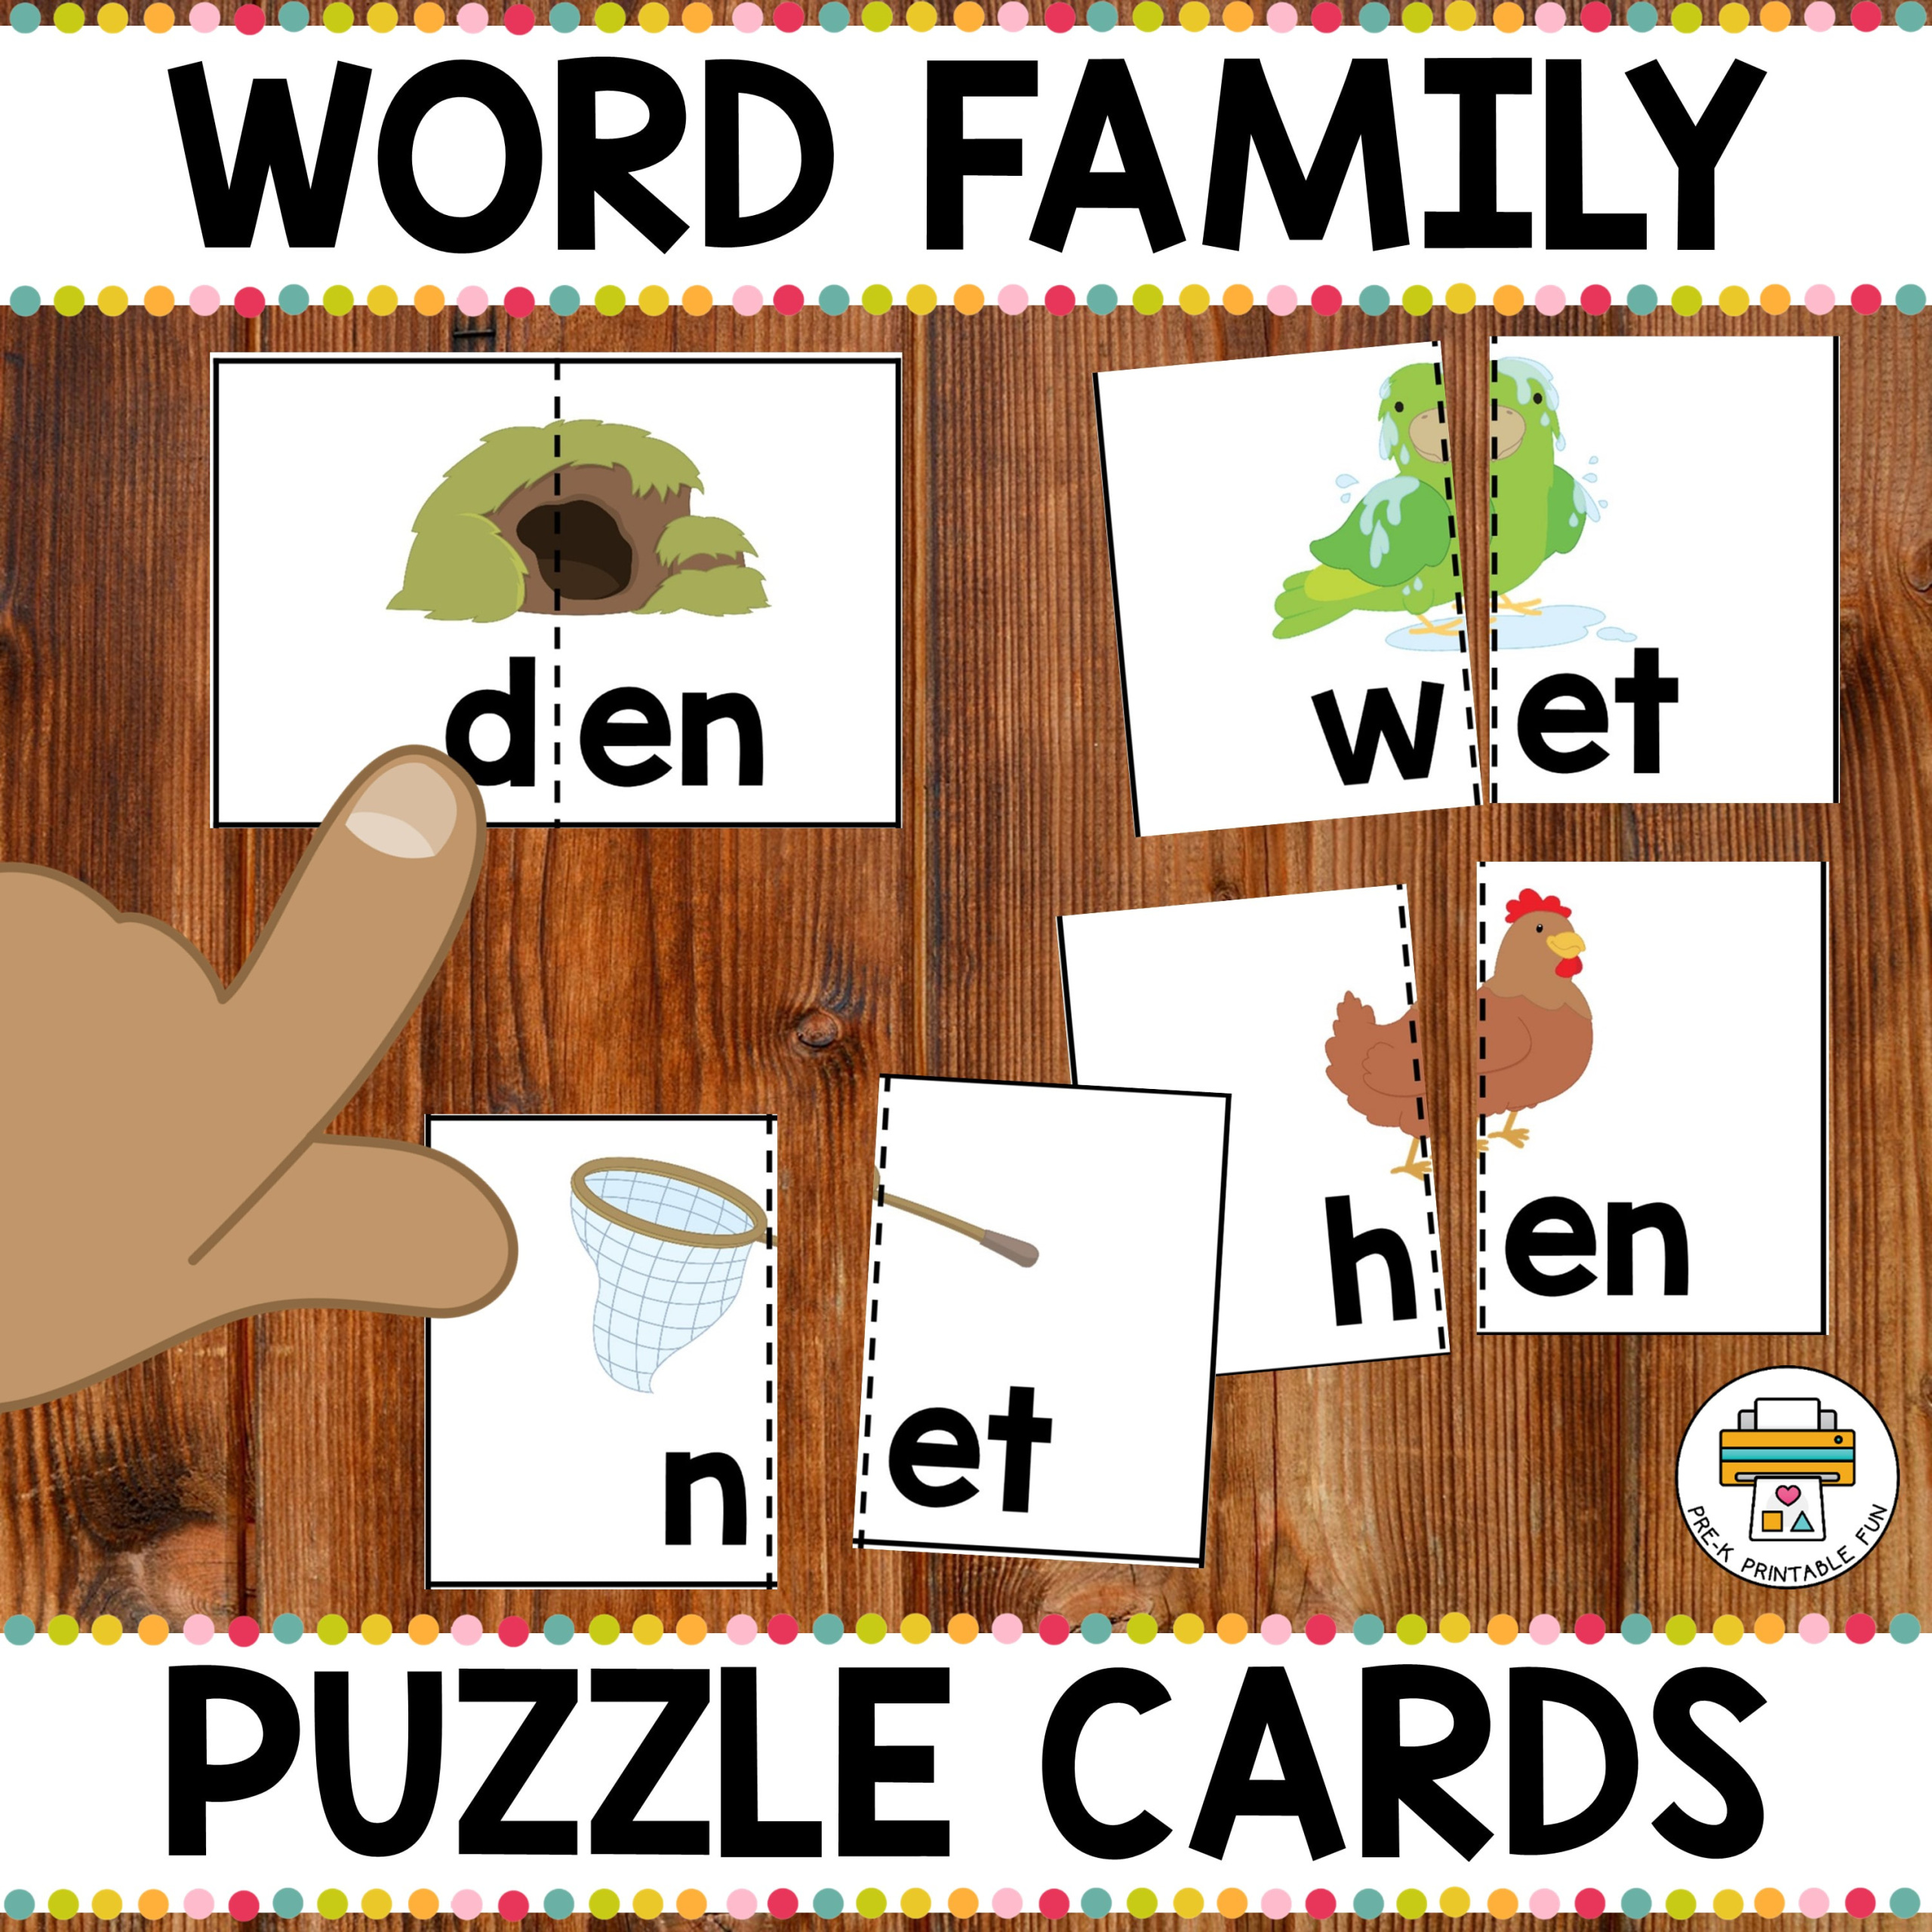 word-family-cards-paringin-st2